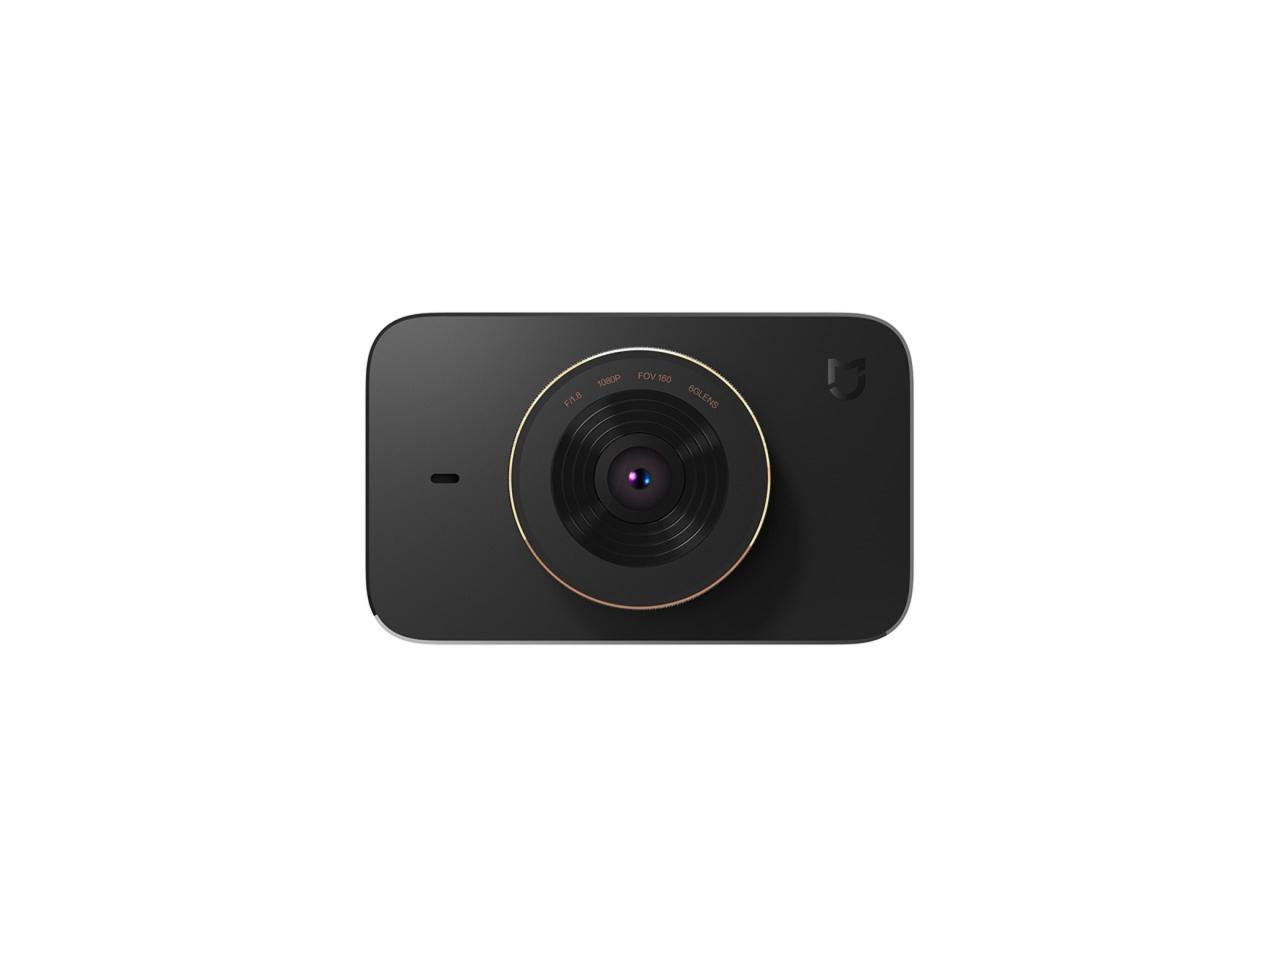 Xiaomi Mi Dash Cam Global Version 1080P 3.0 inch TFT Screen Car Recorder Camera 160 Degree Wide Angle Viewing, Support TF Card / G-Sensor / App Viewing(Black)